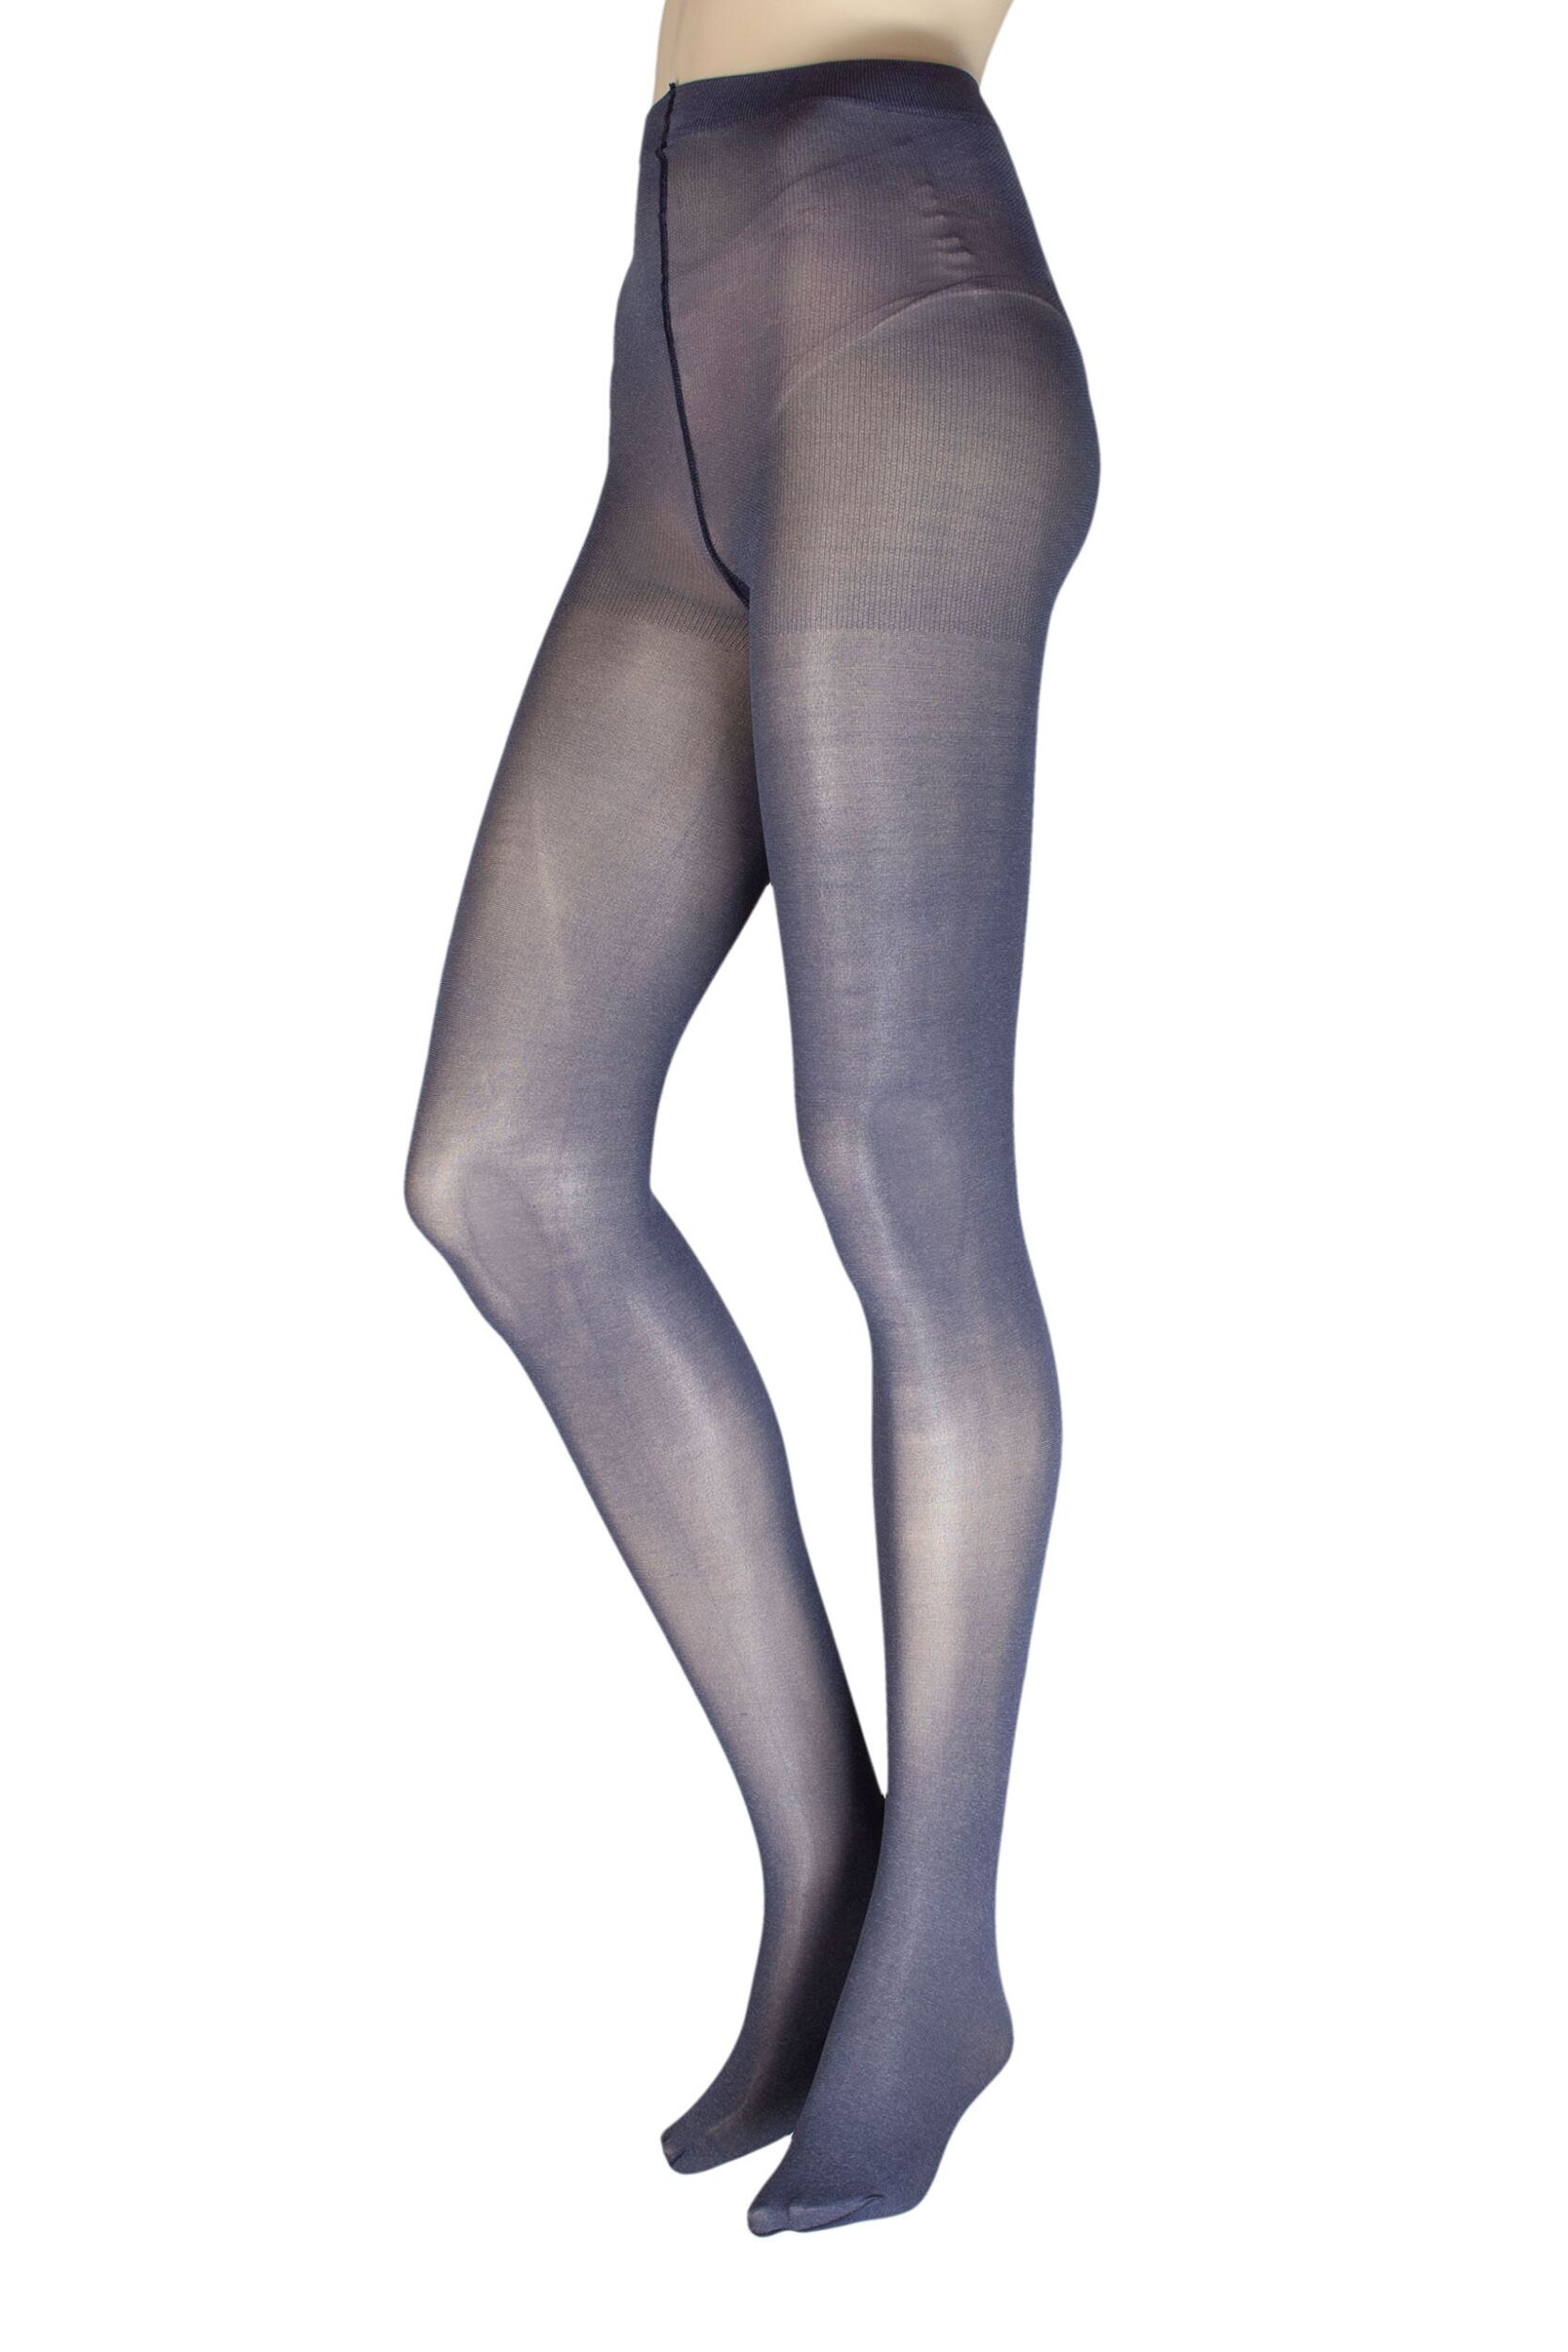 ladies 1 pair charnos marl opaque tights navy small / medium